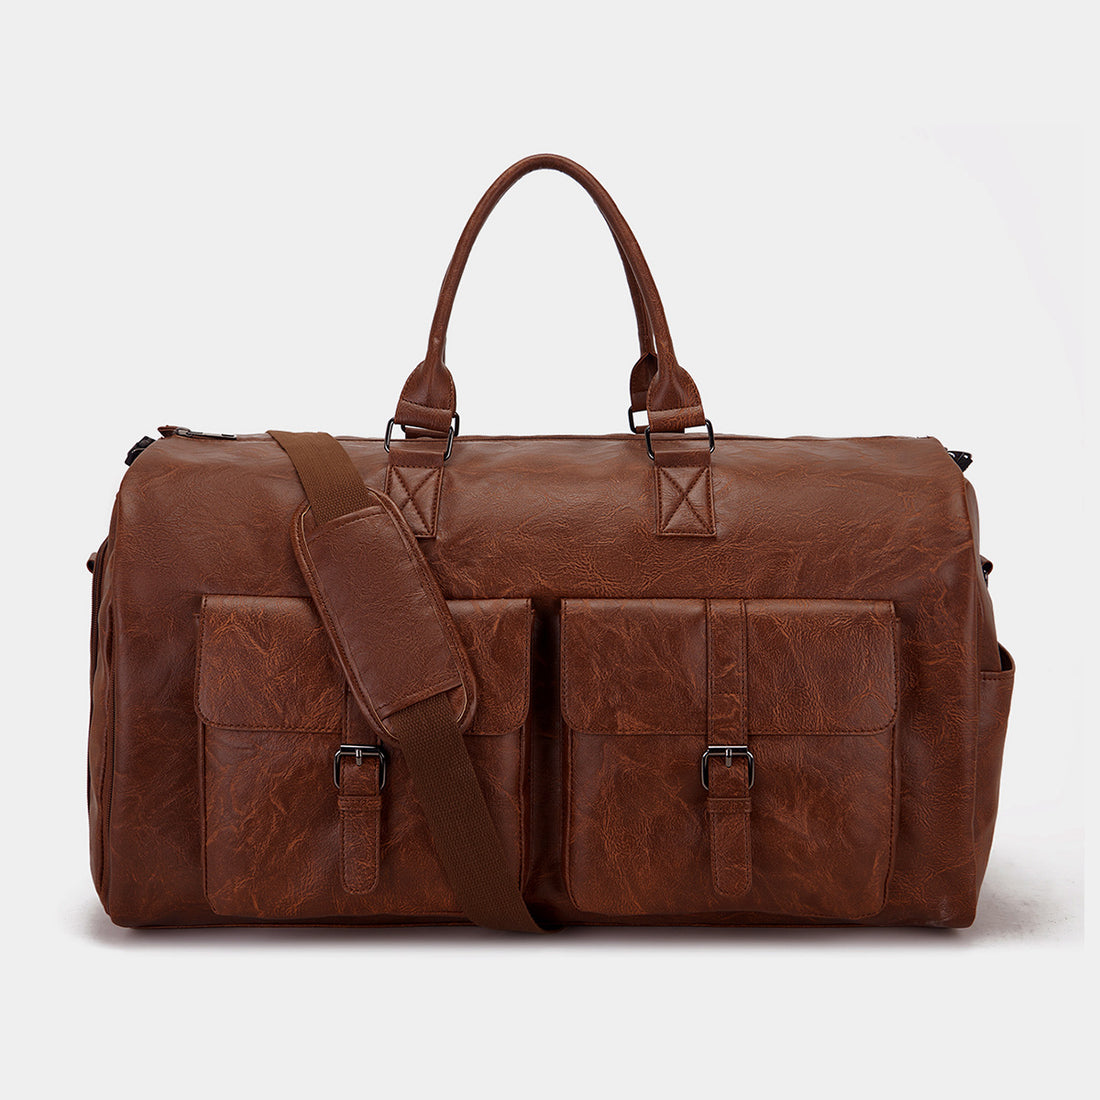 Portable PU Leather Garment Travel Duffel Bag